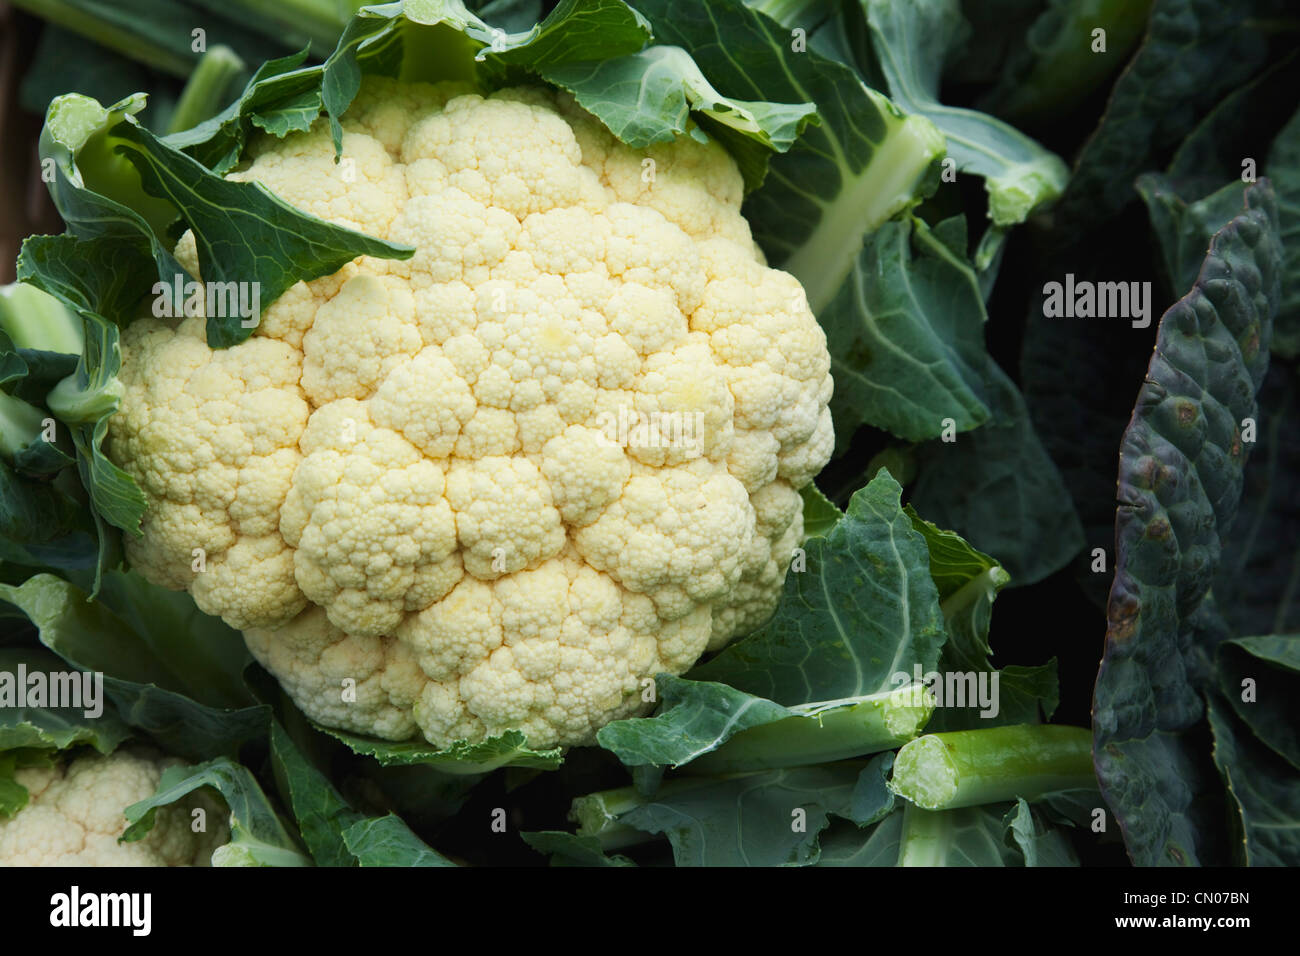 Food, Vegetables, Brassica oleracea botrytis, Cauliflower on sale at farm shop. Stock Photo